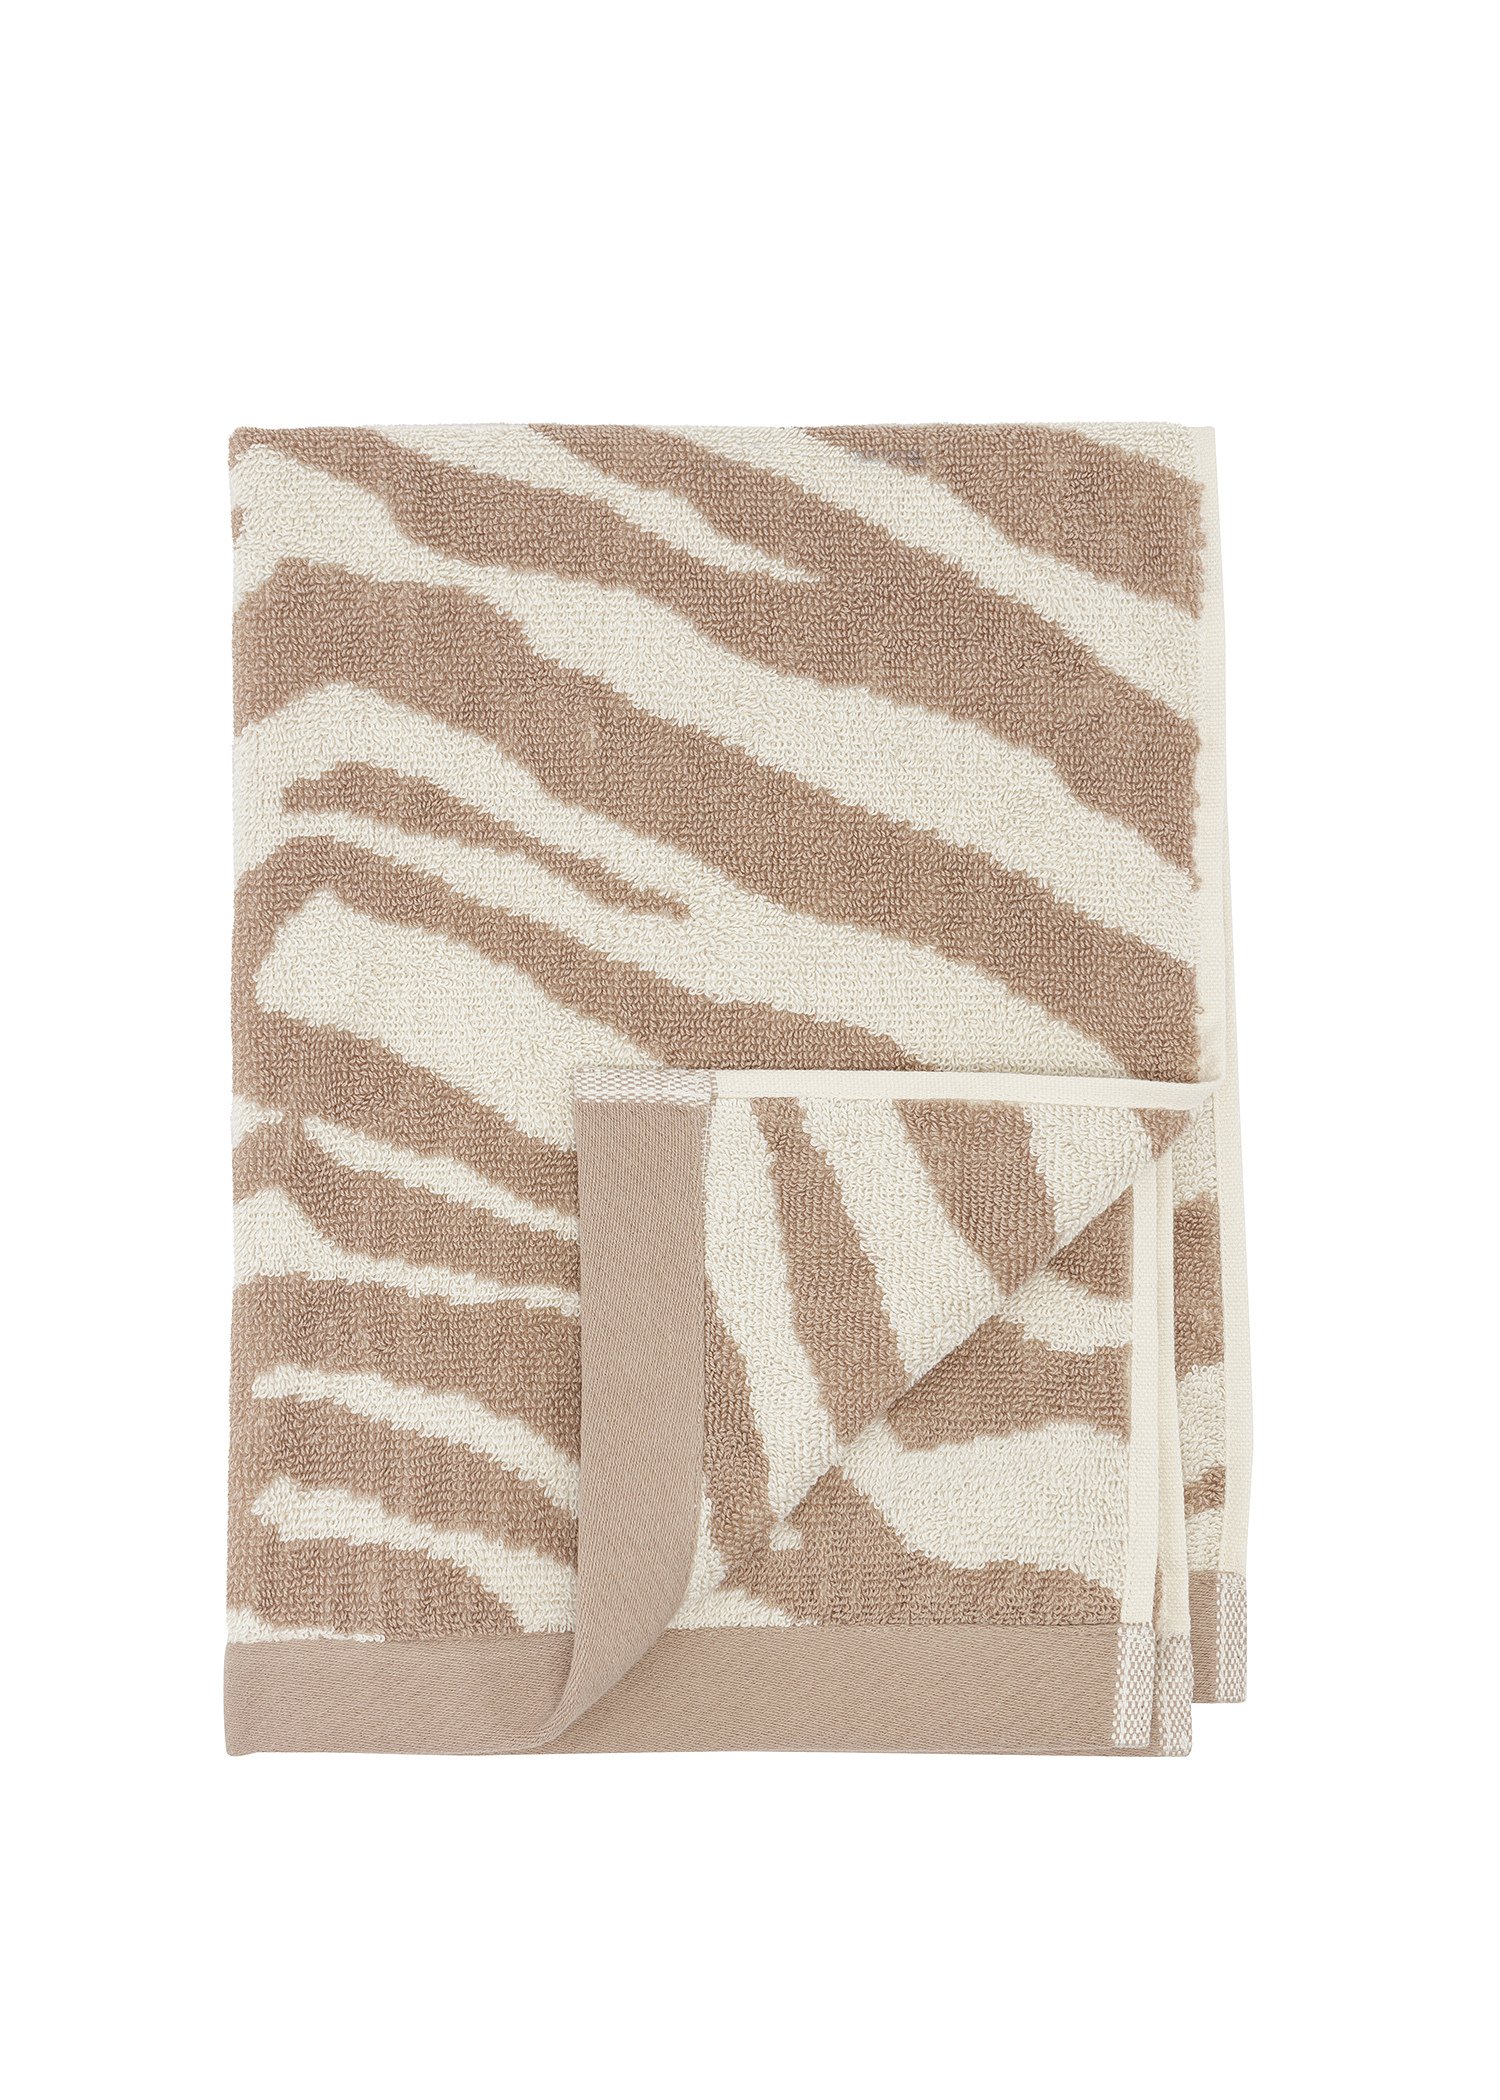 Zebra patterned towel